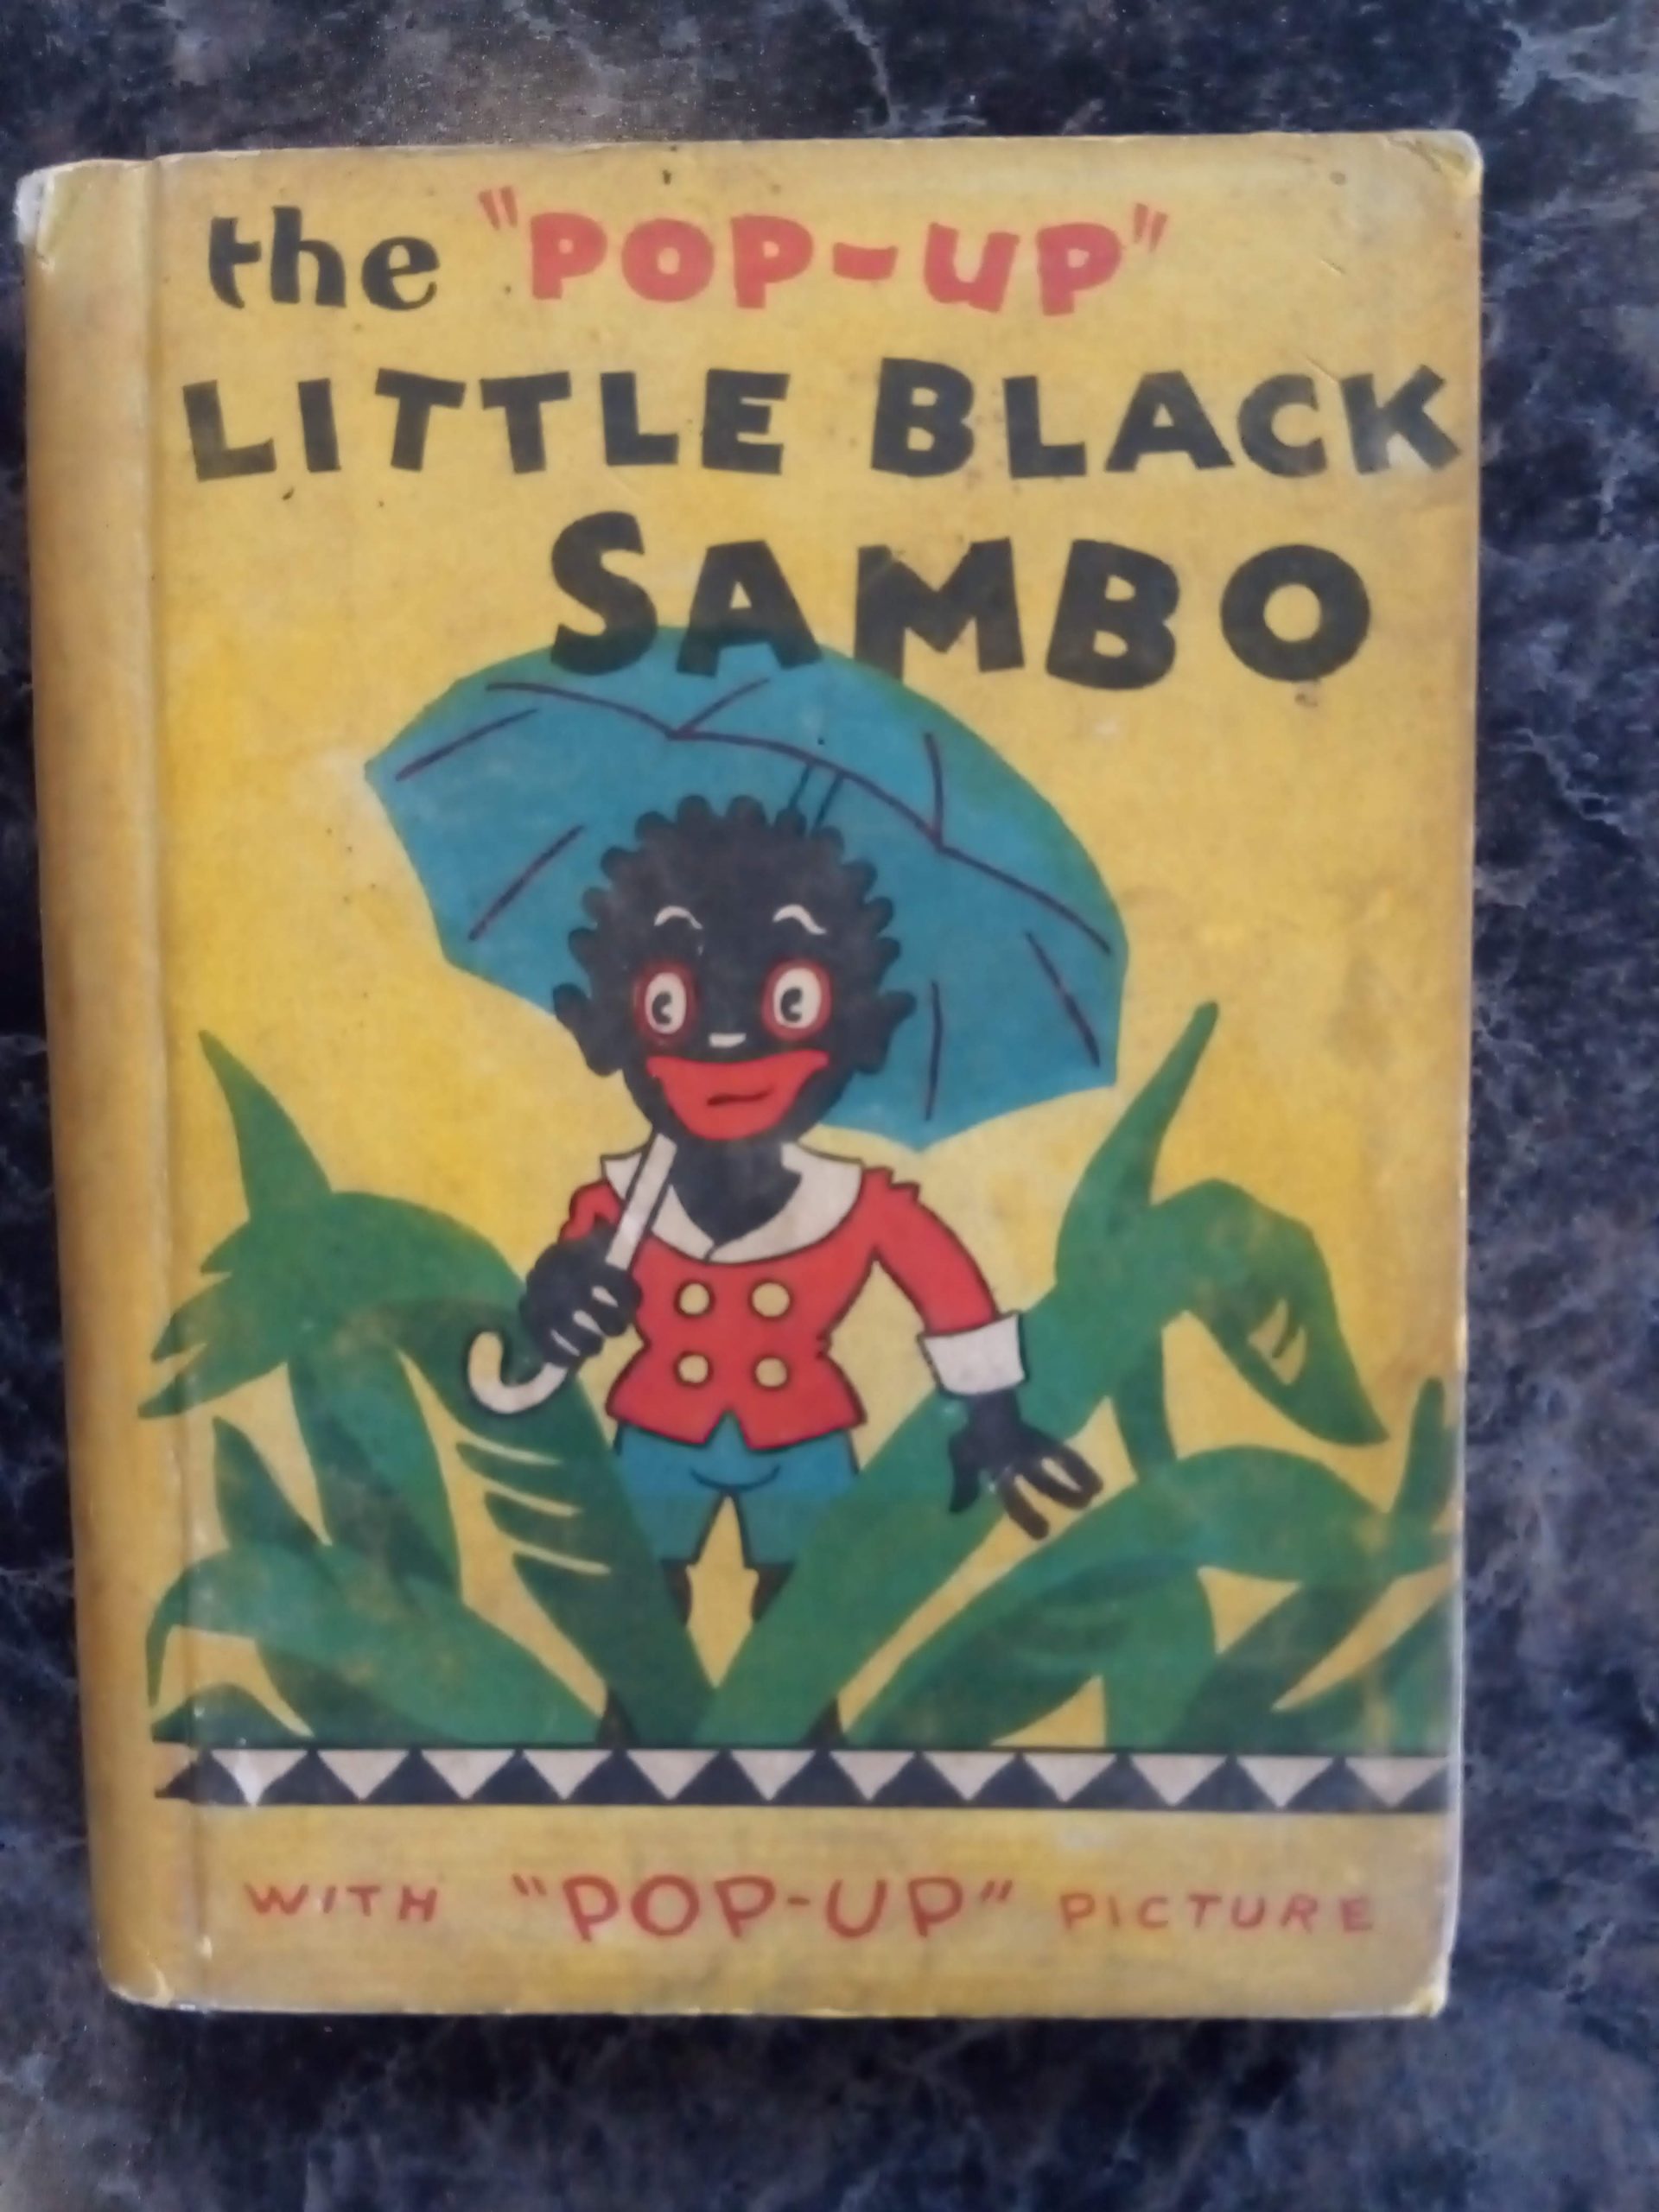 Cover of "The Pop-Up Little Black Sambo"